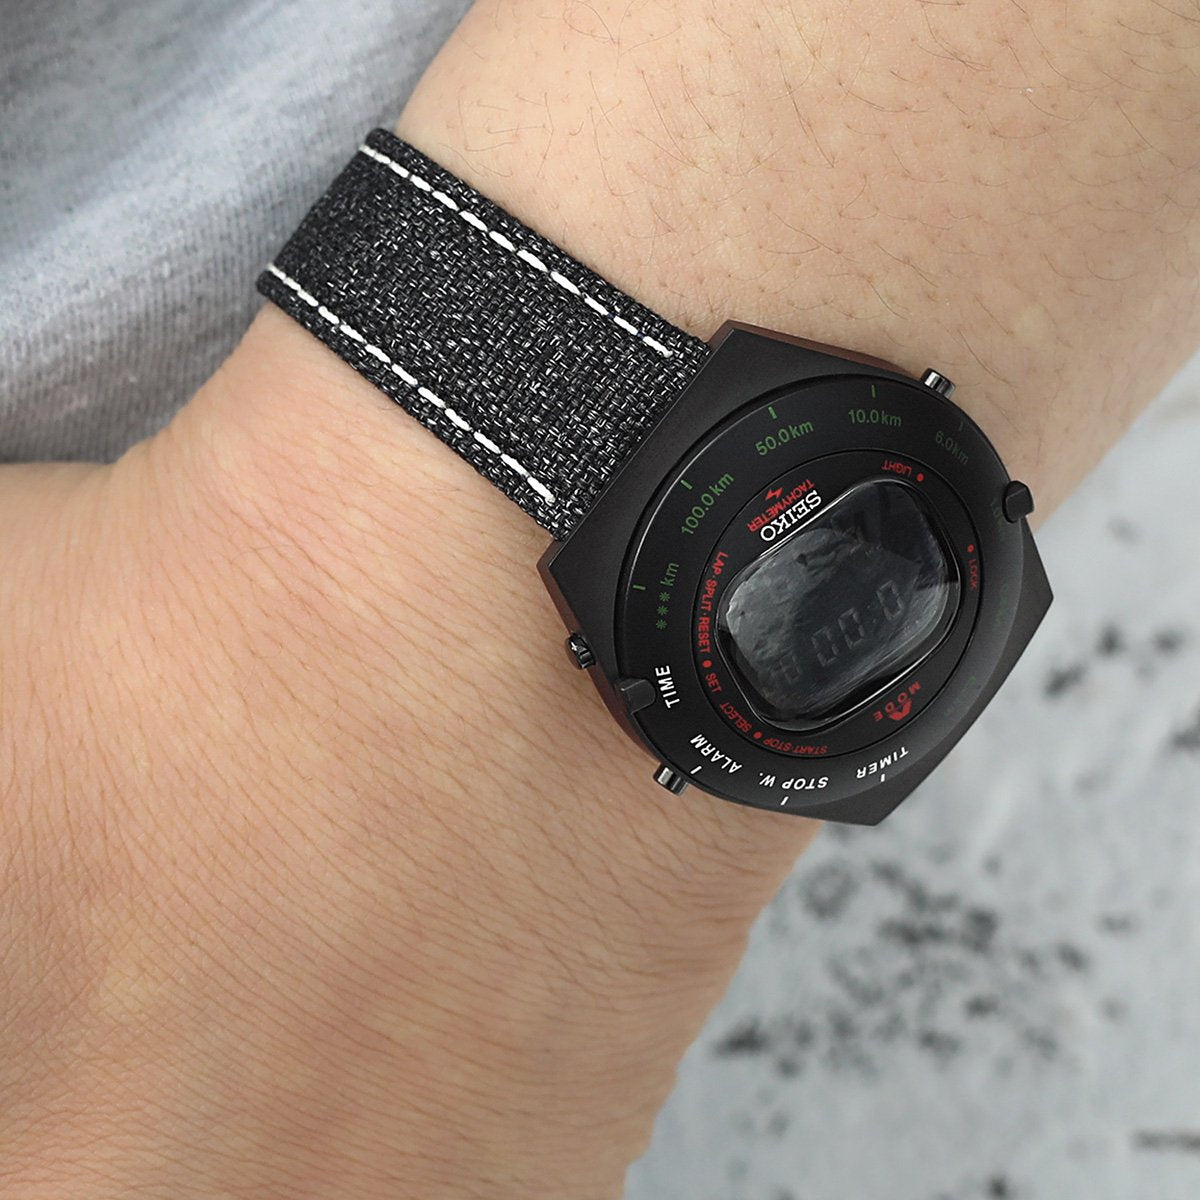 Seiko x Giugiaro Design Digital Driver Watch Estnation Limited Edition SBJG011 Strapcode Watch Bands